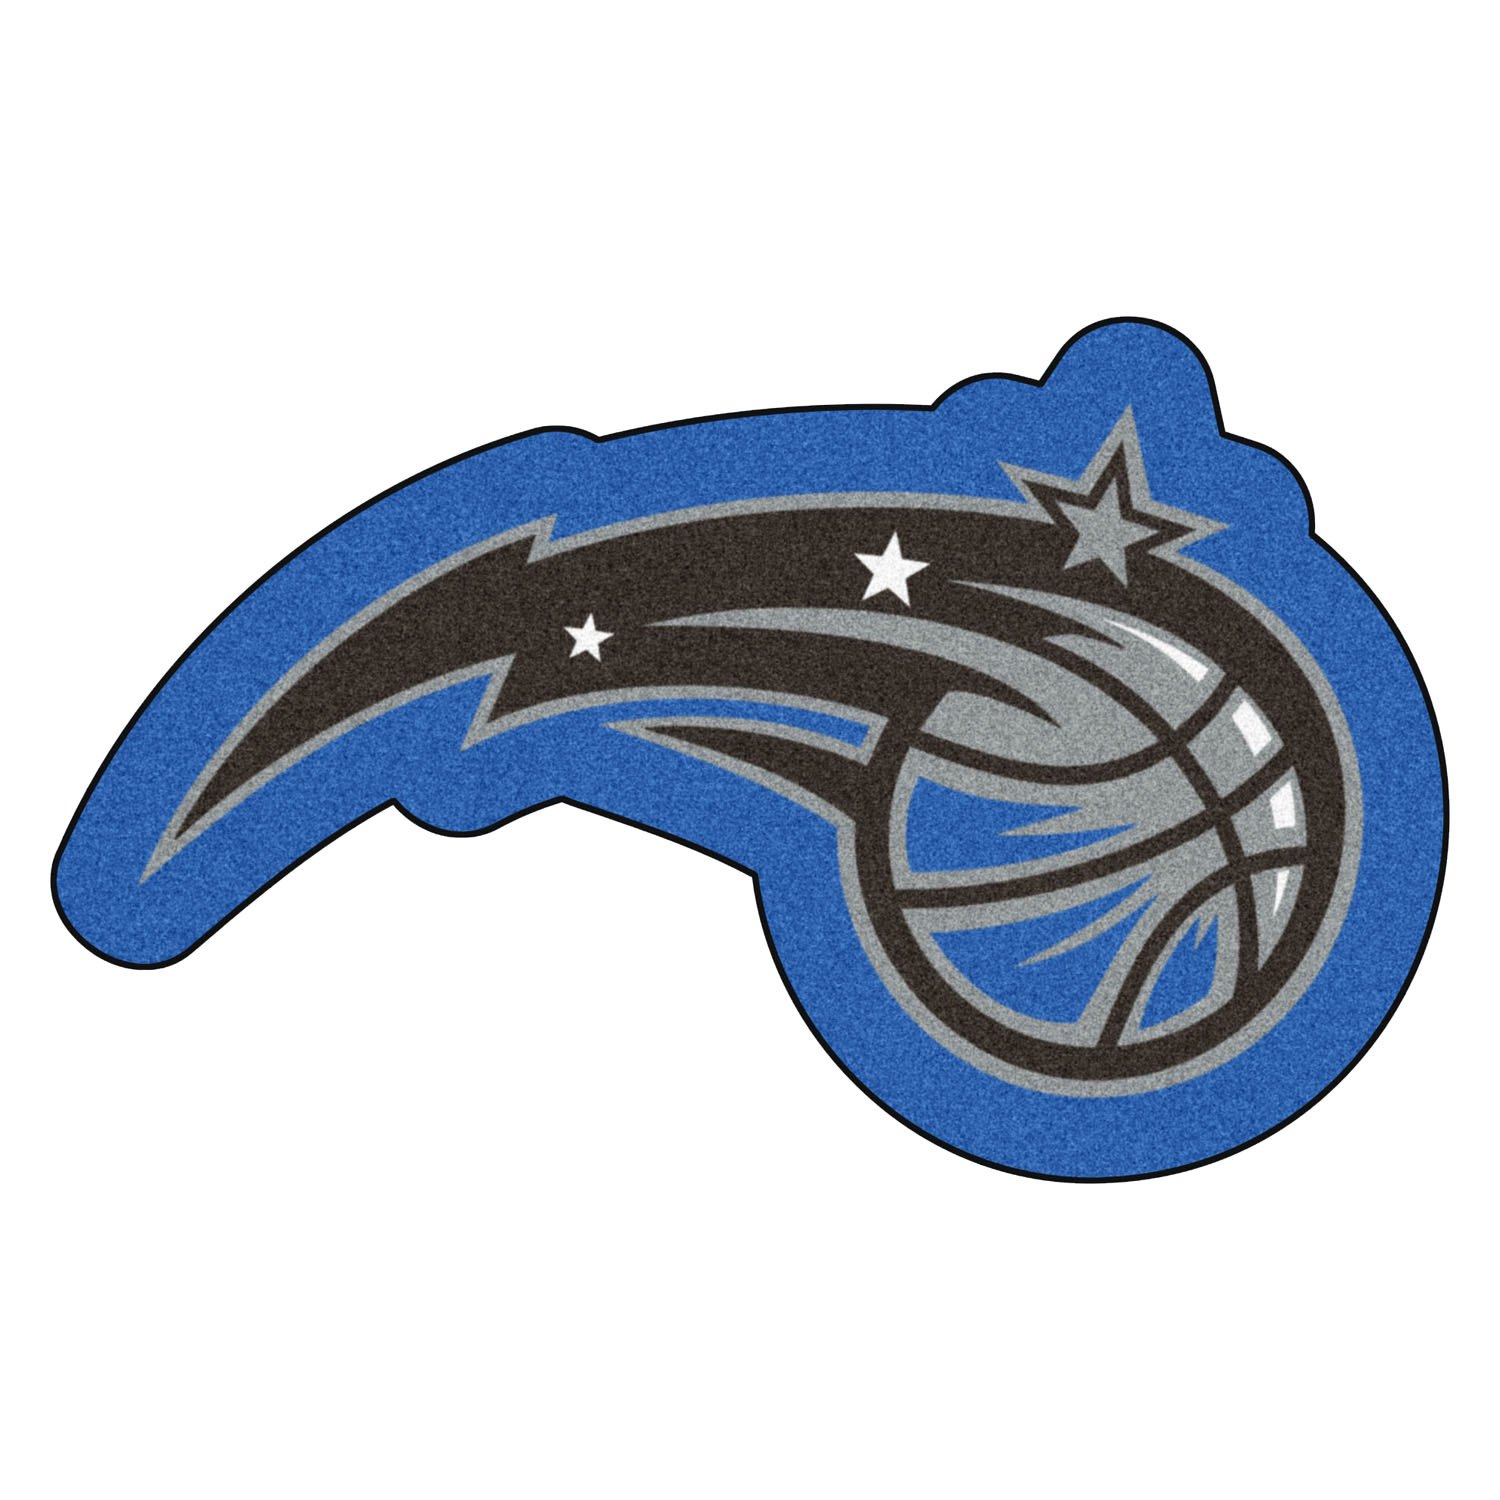 Orlando Magic Logo Font